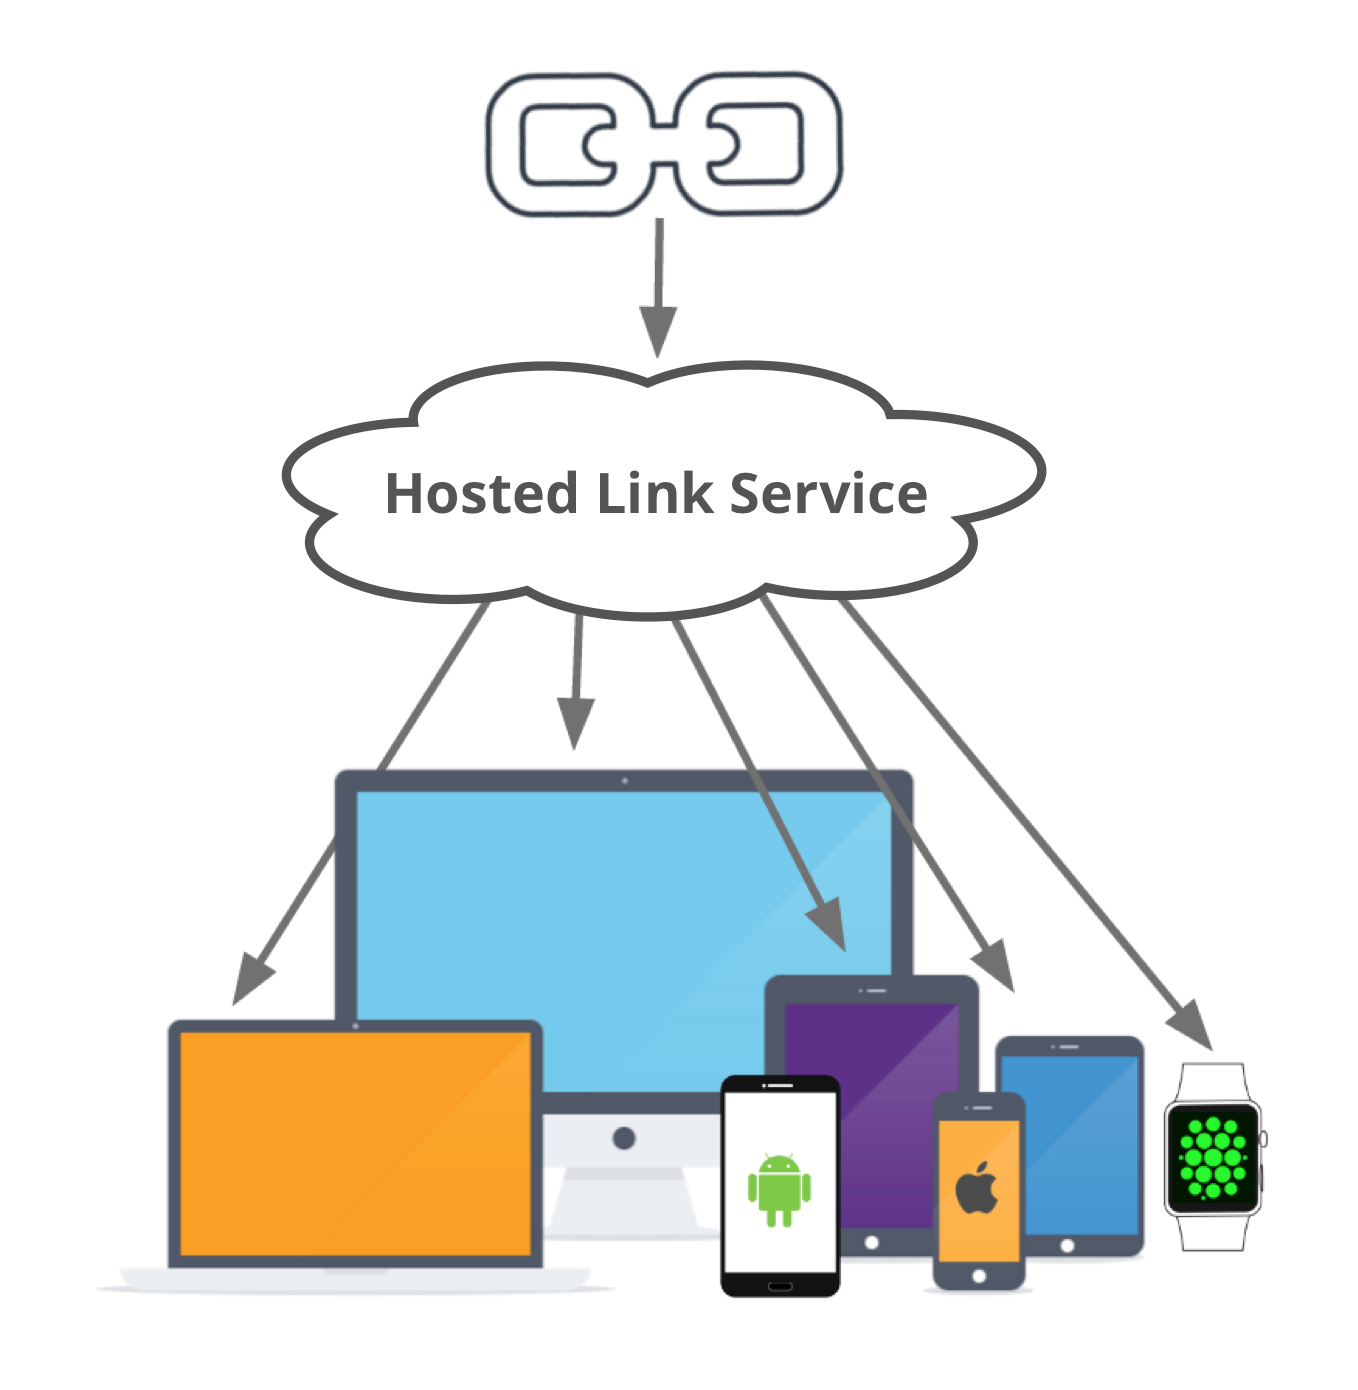 Hosted Link Service